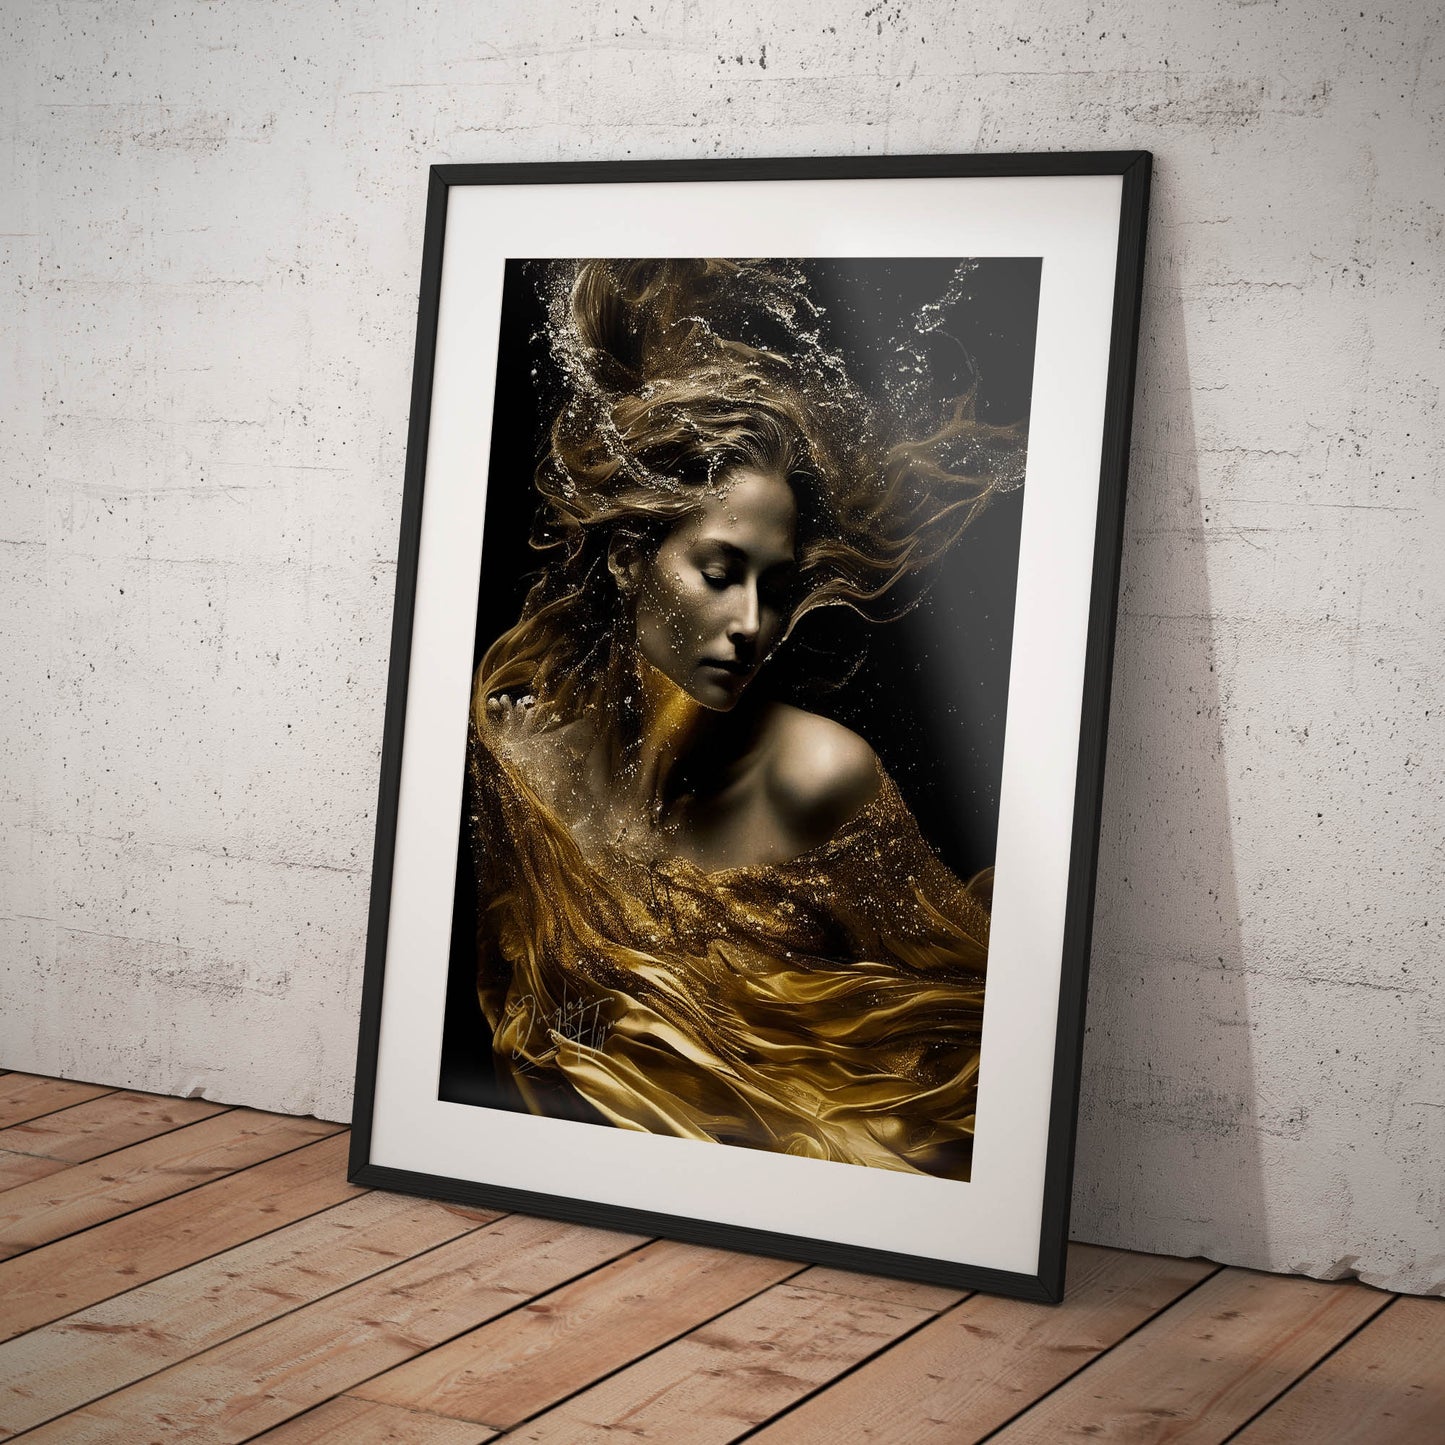 »Golden Mermaid Couture« retro poster